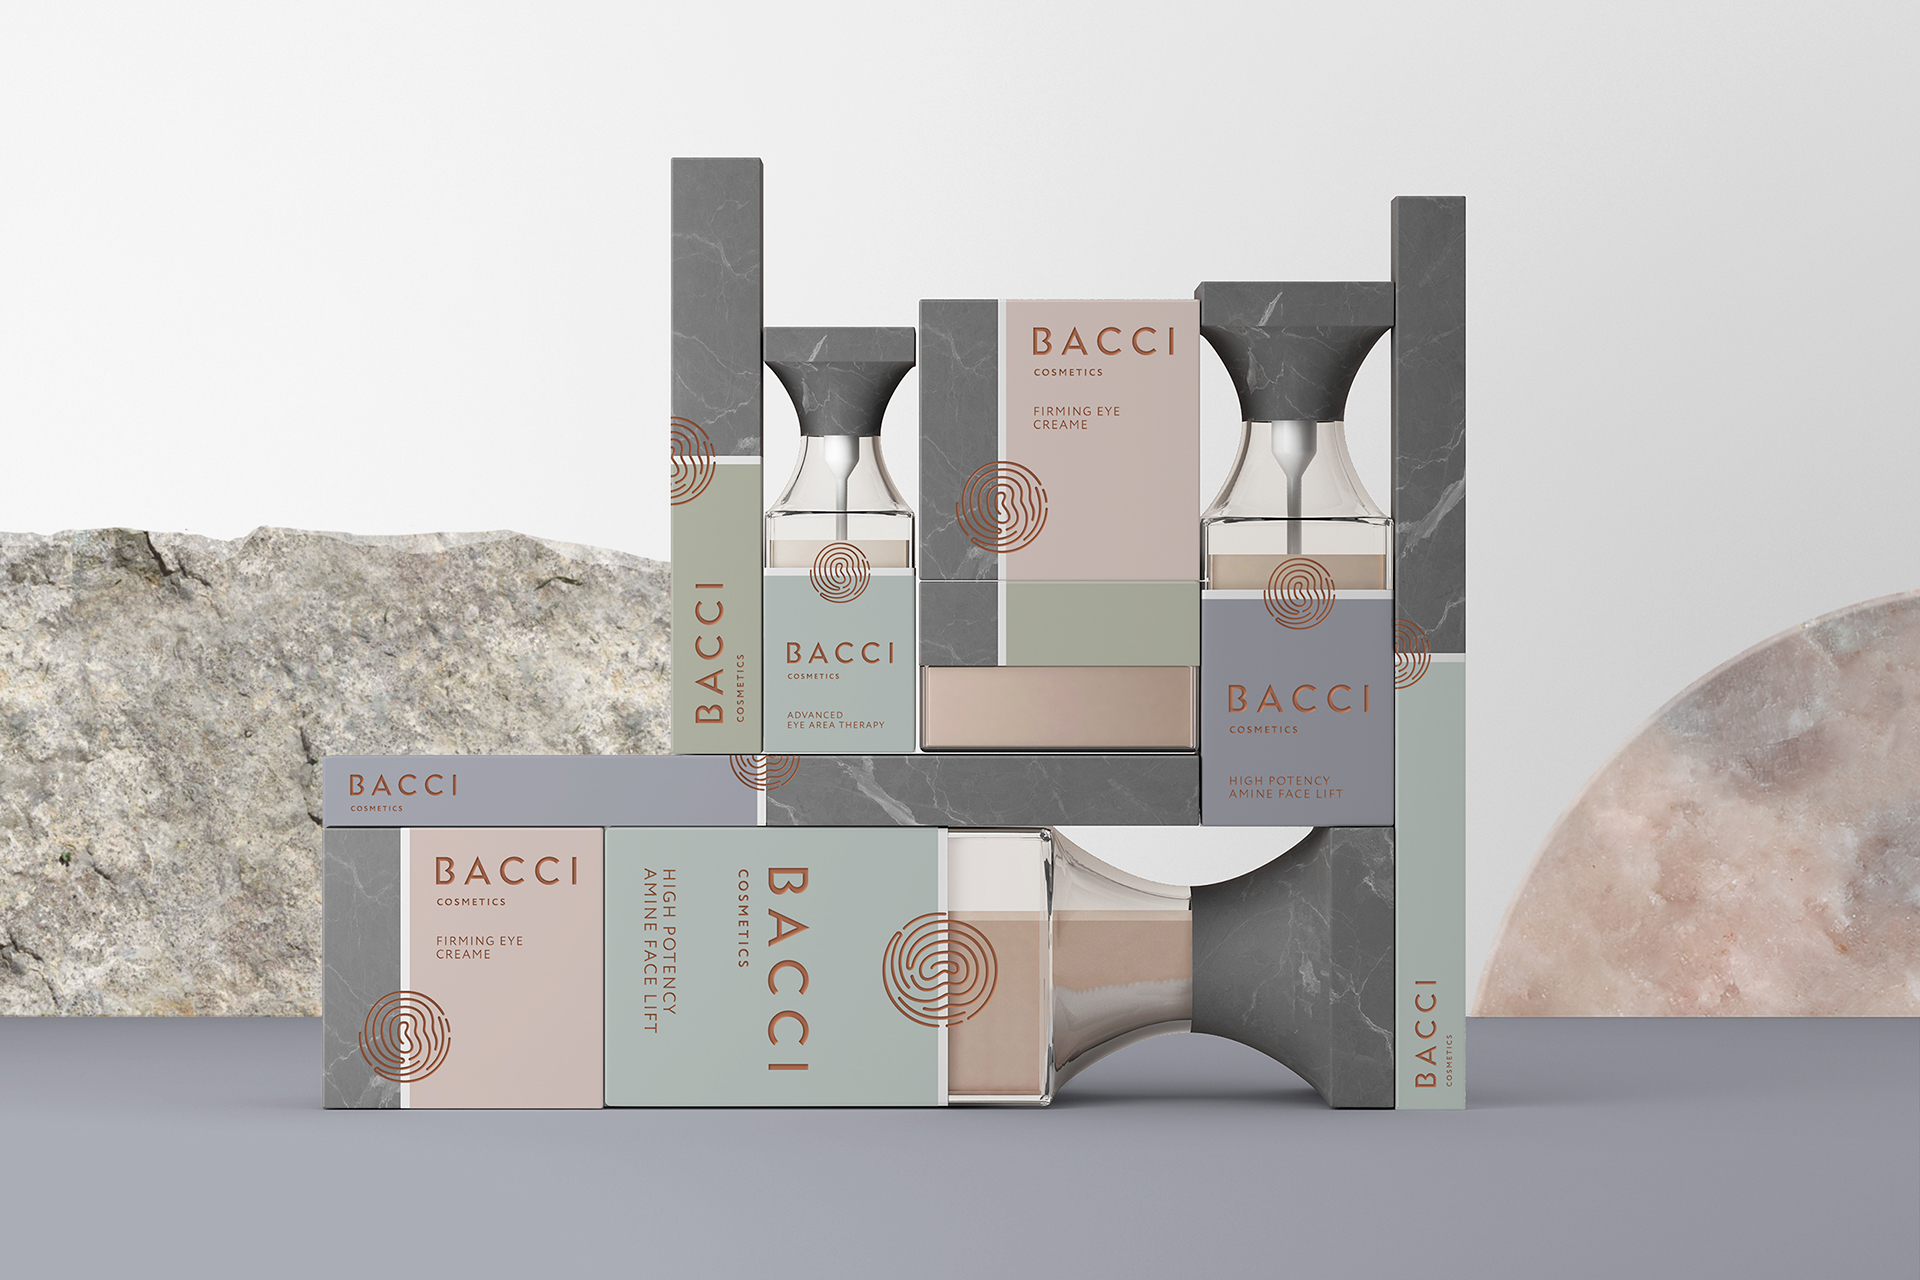 mejor-packaging-cosmetica-Bacci_09-